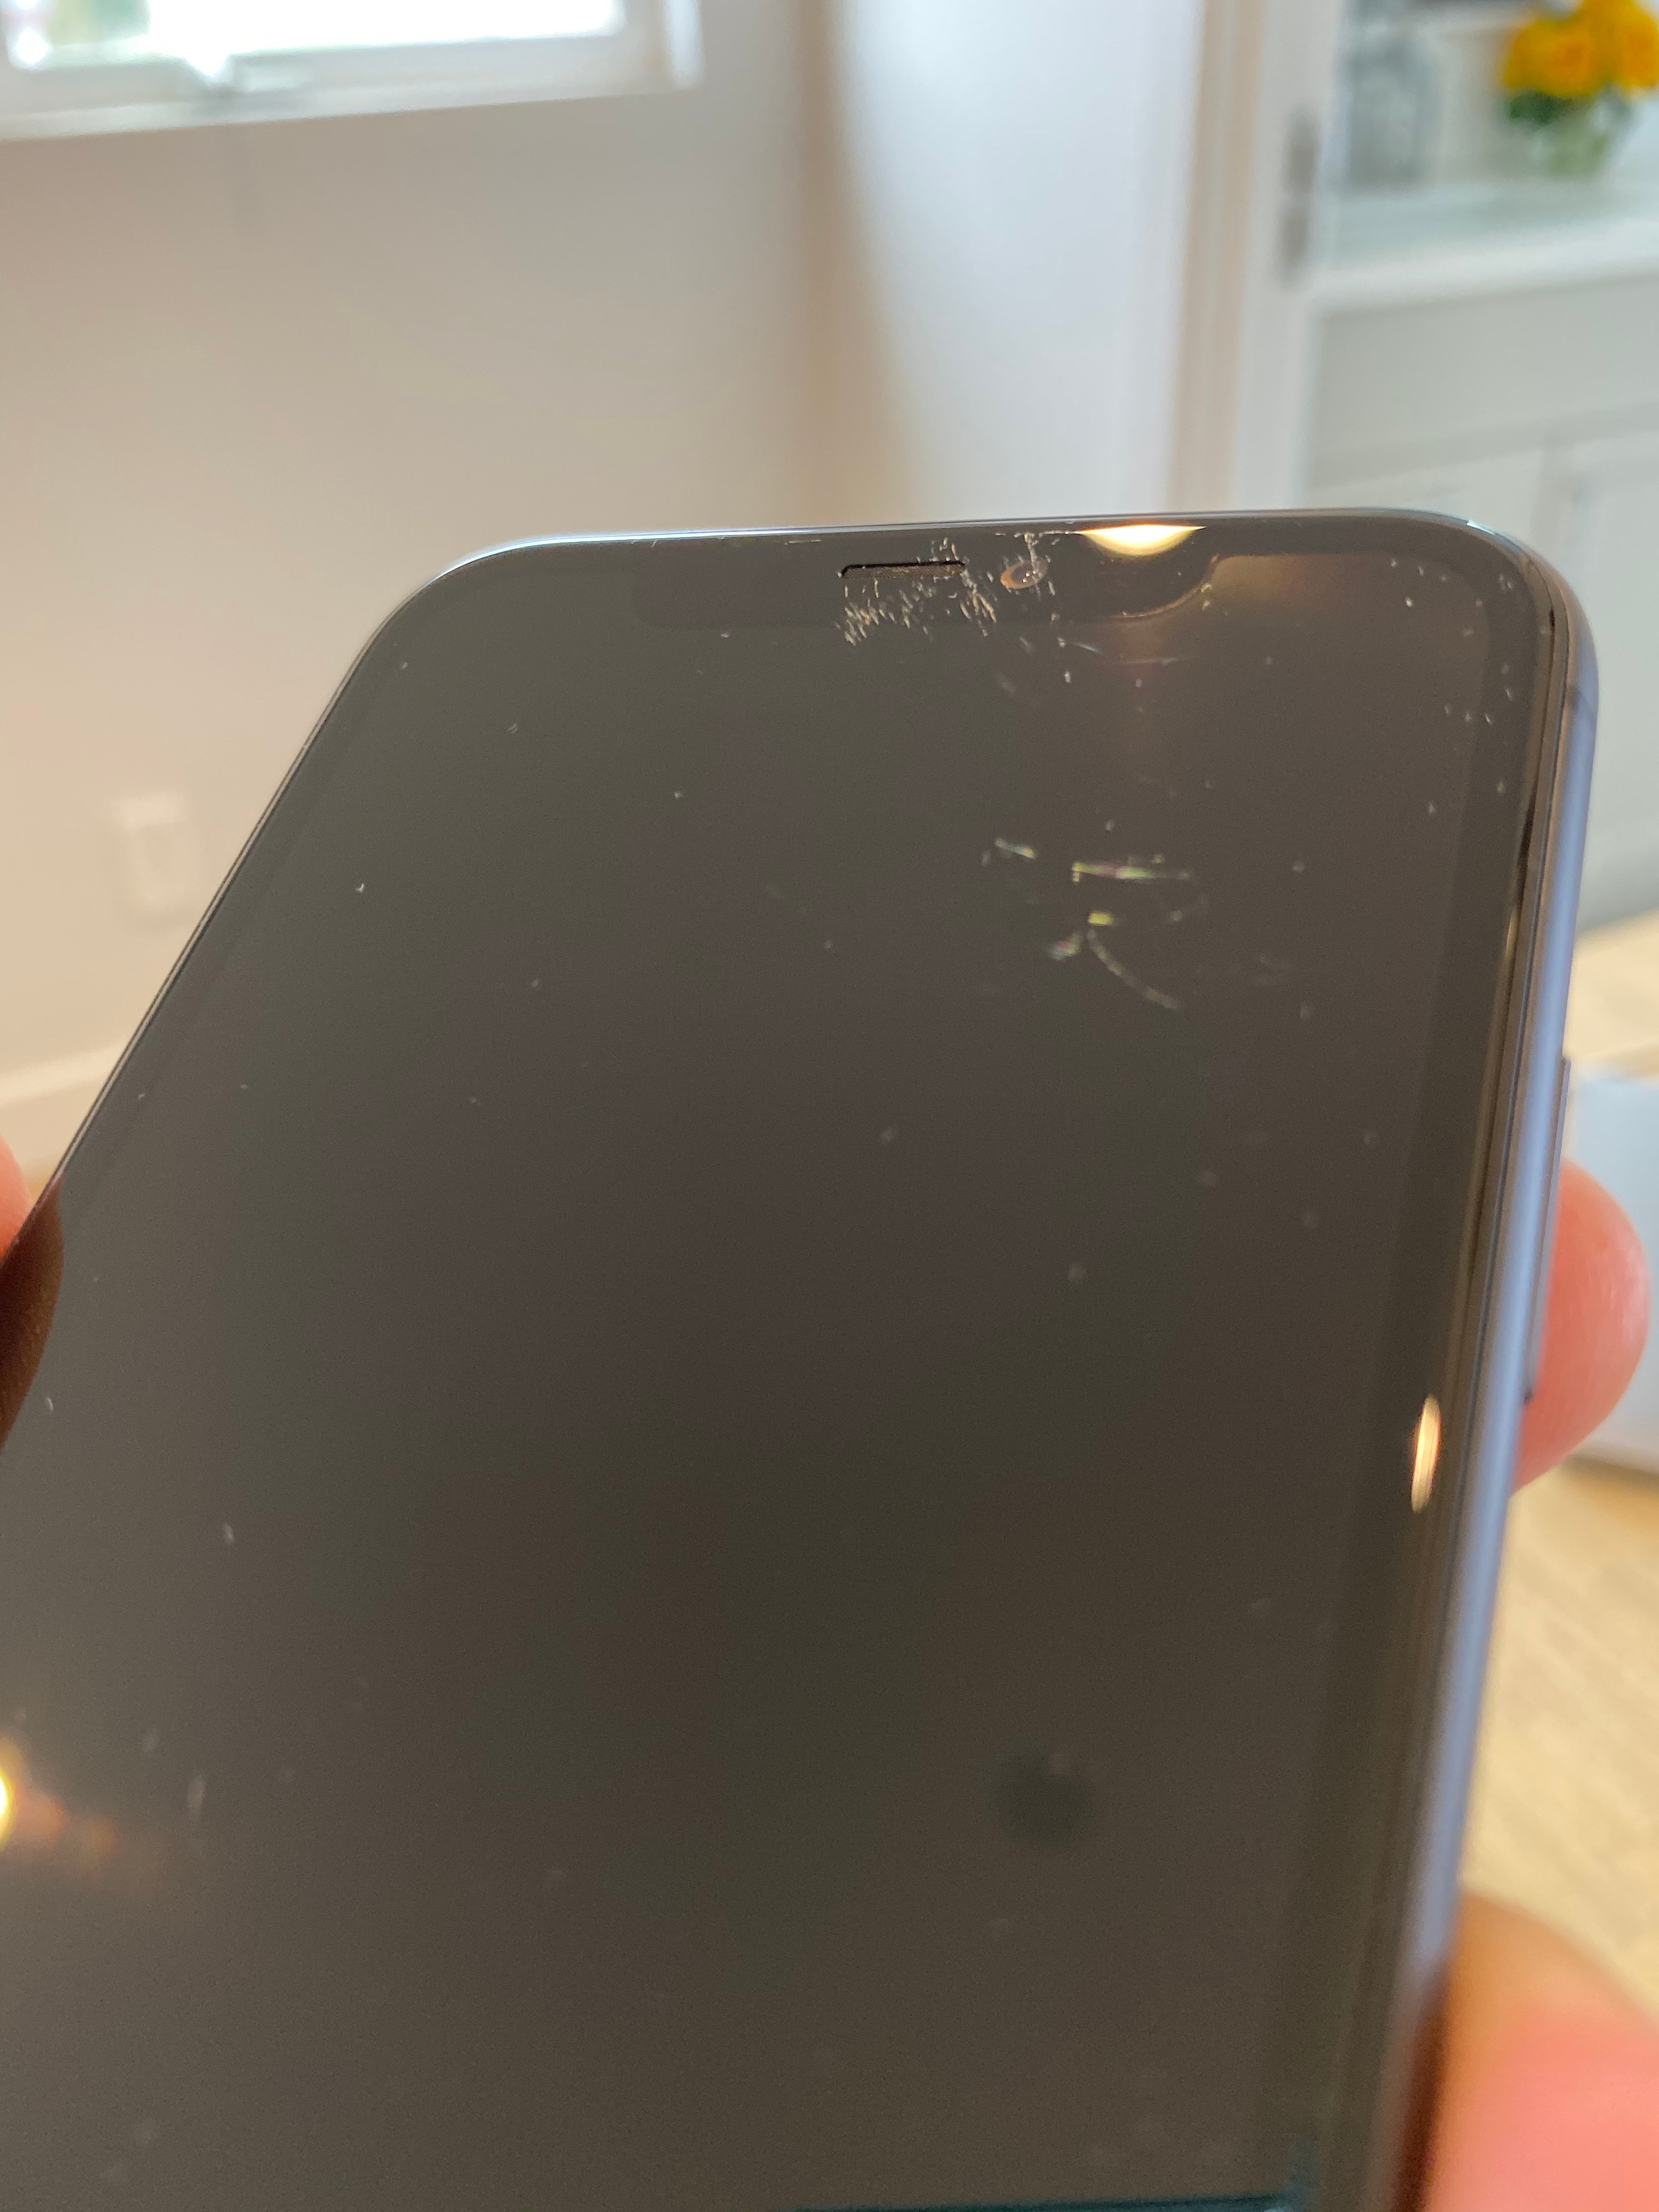 Do iPhone screen scratches go away?